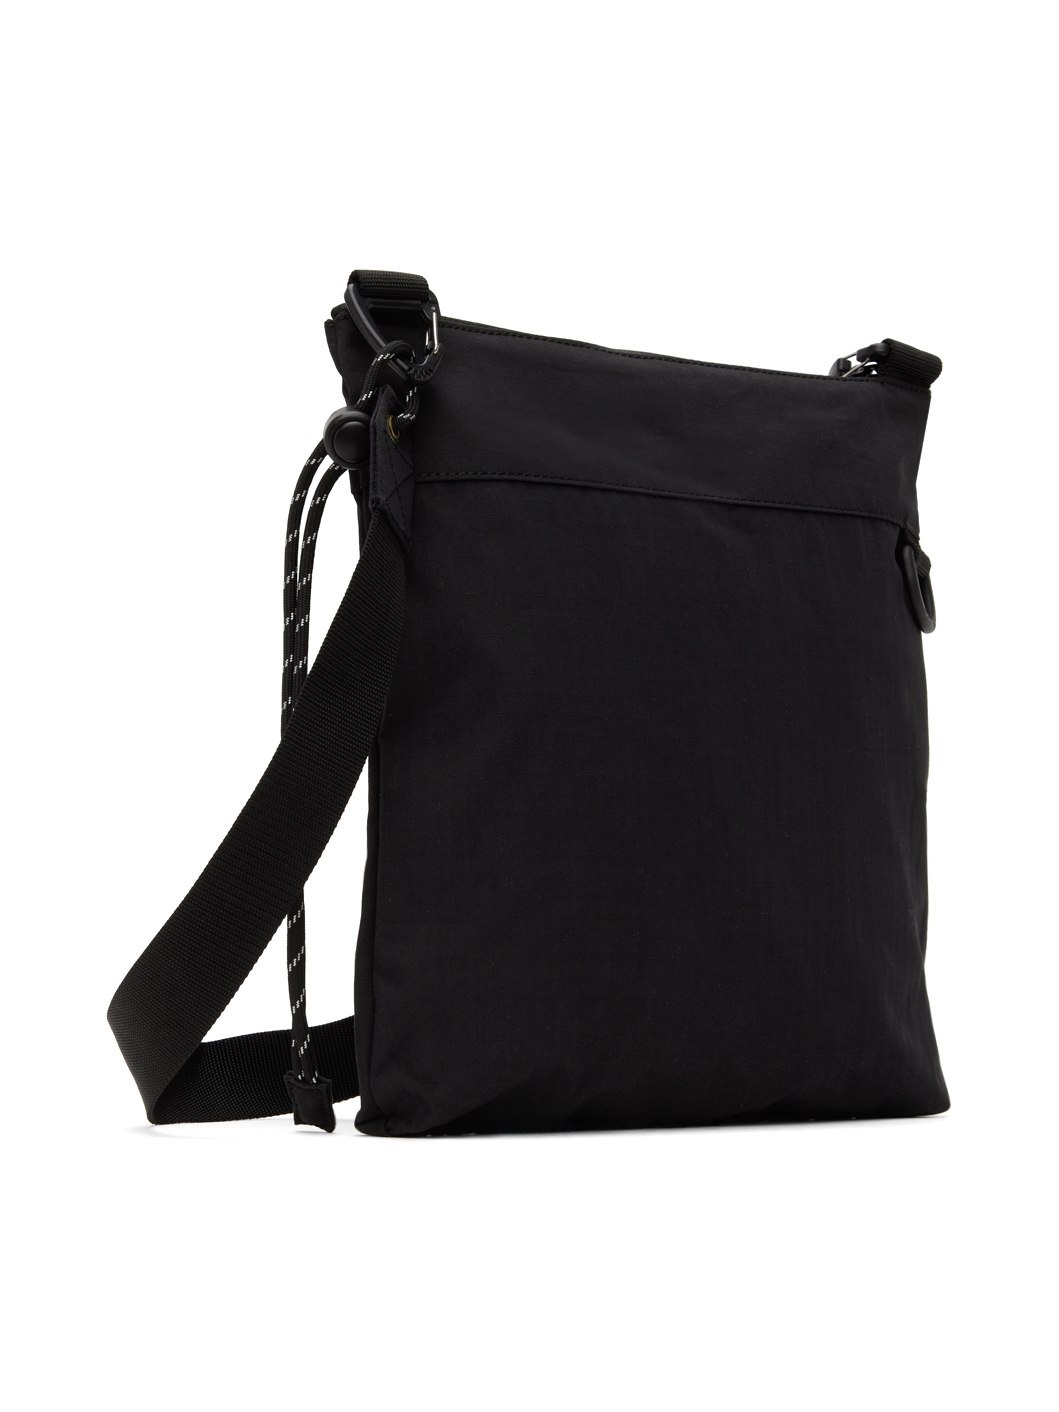 Black Haste Strap Bag - 3